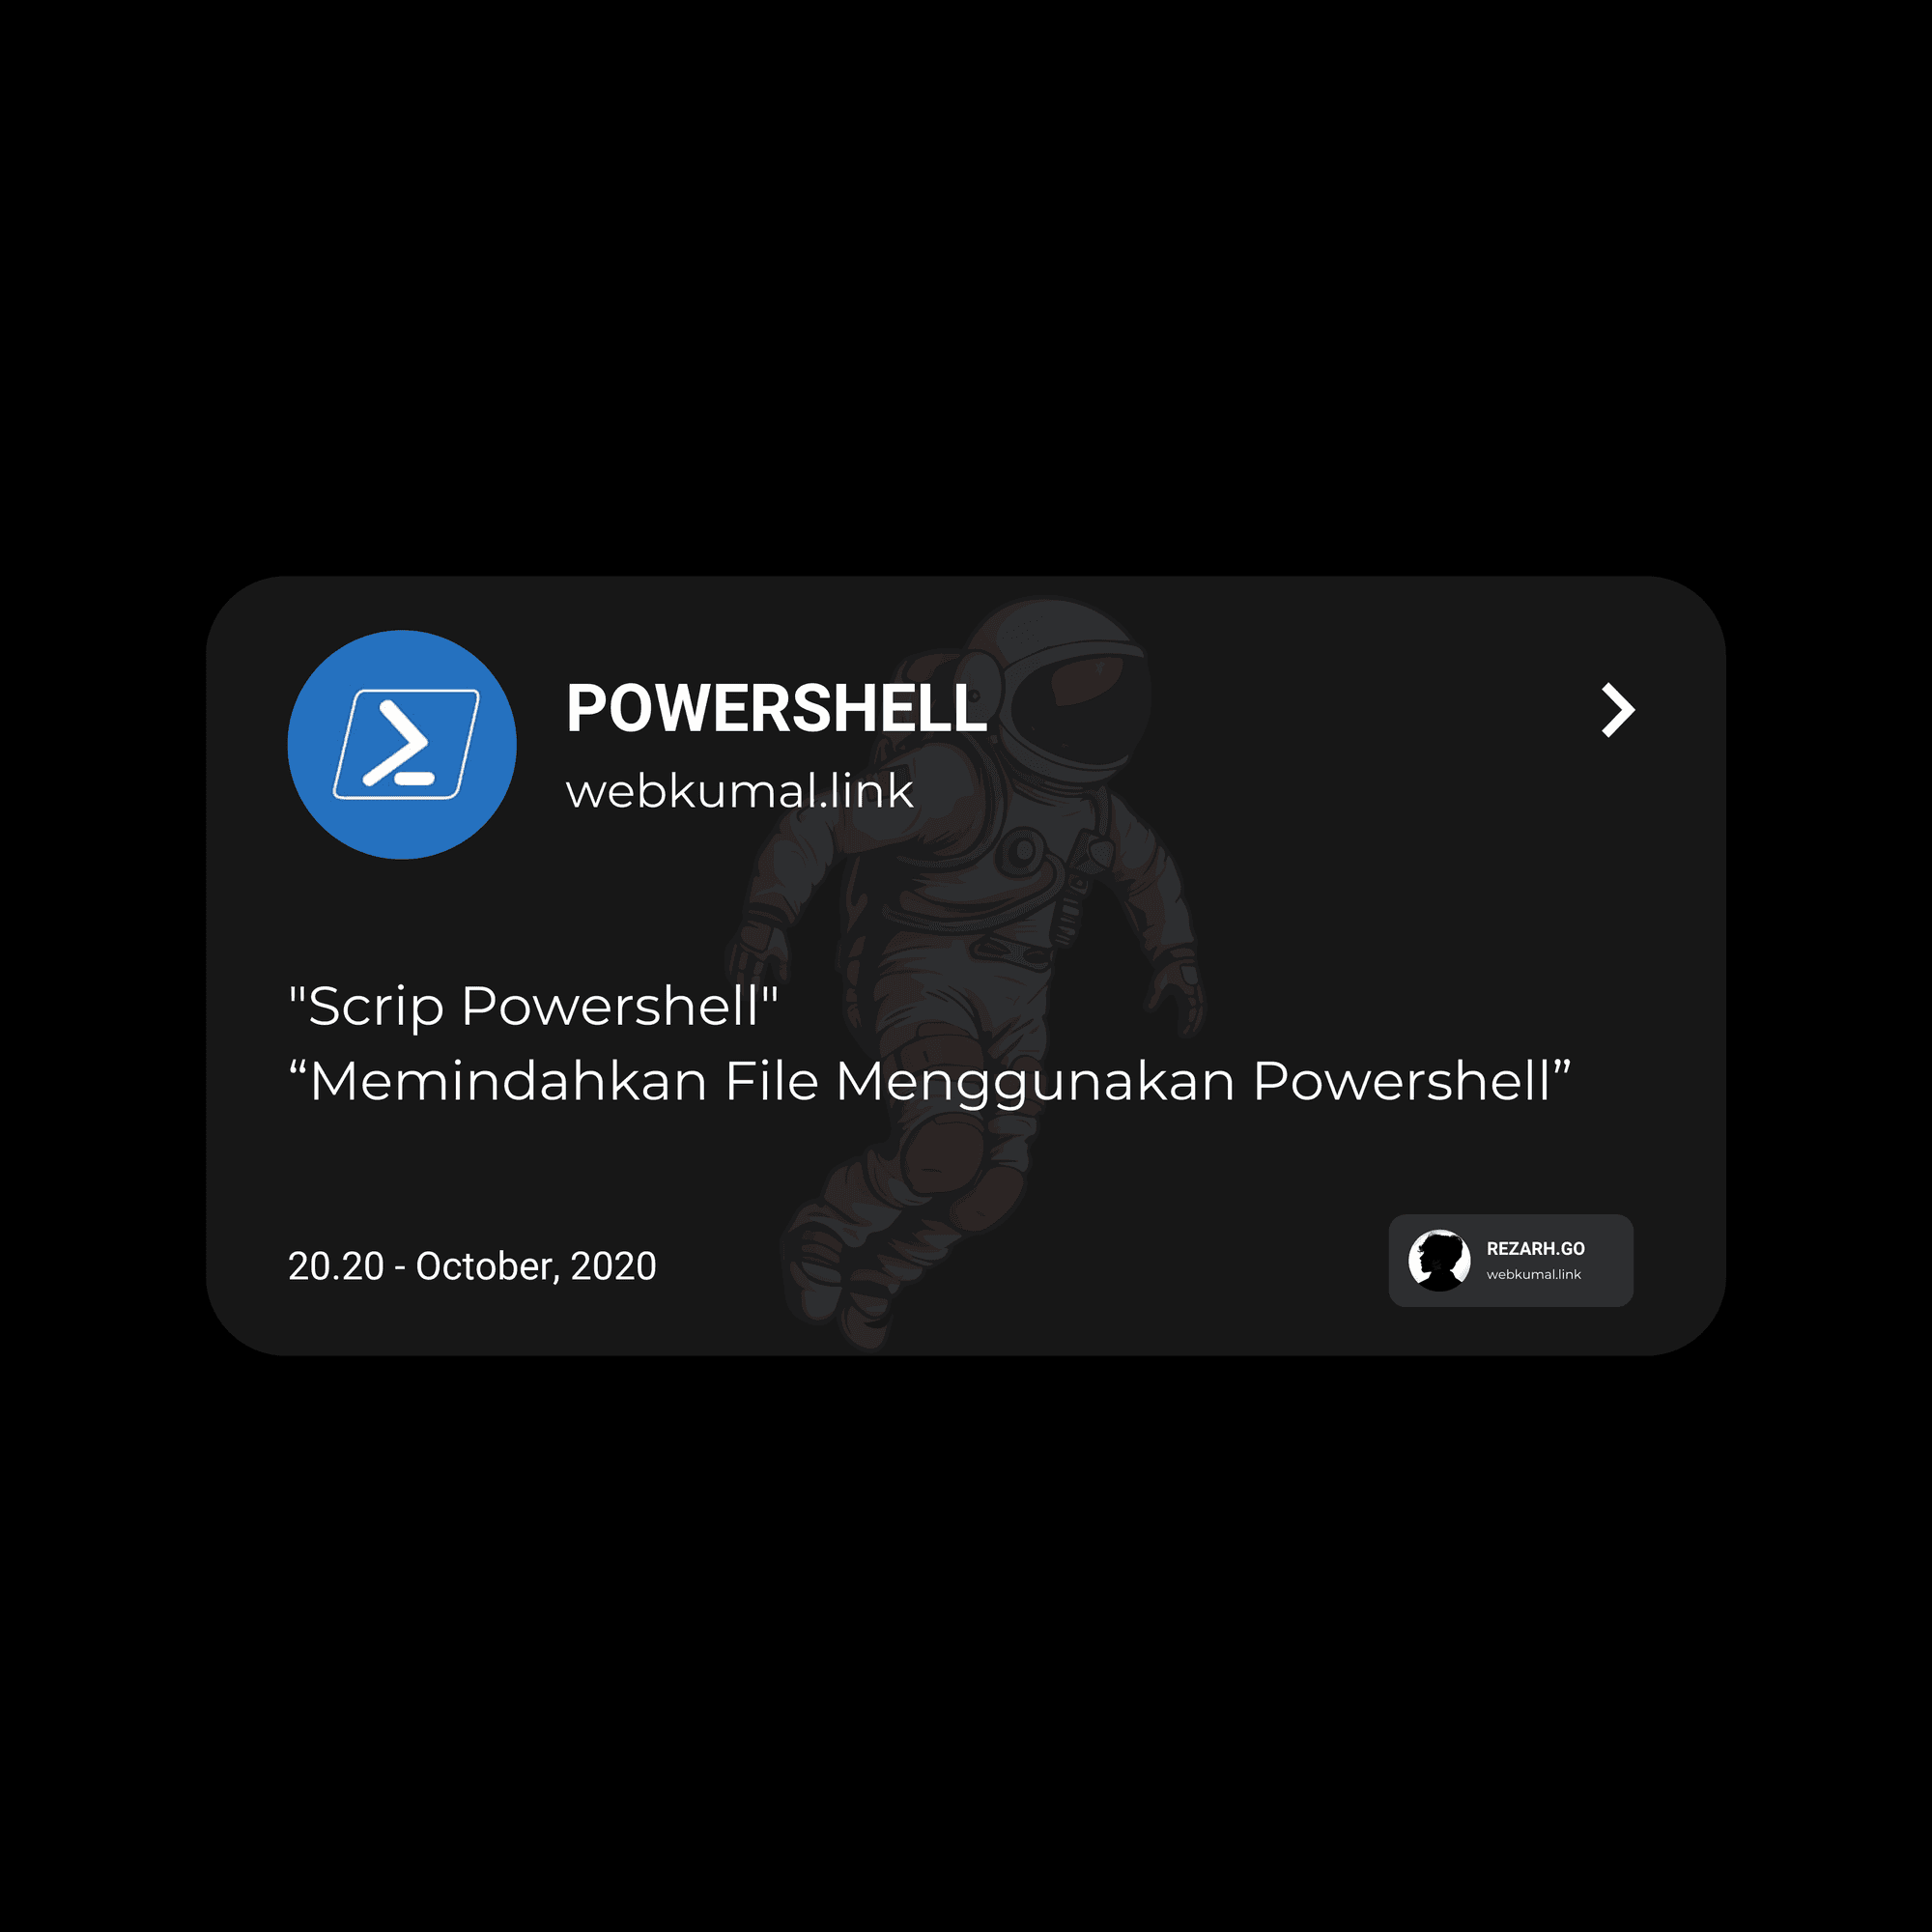 Memindahkan File Menggunakan Powershell